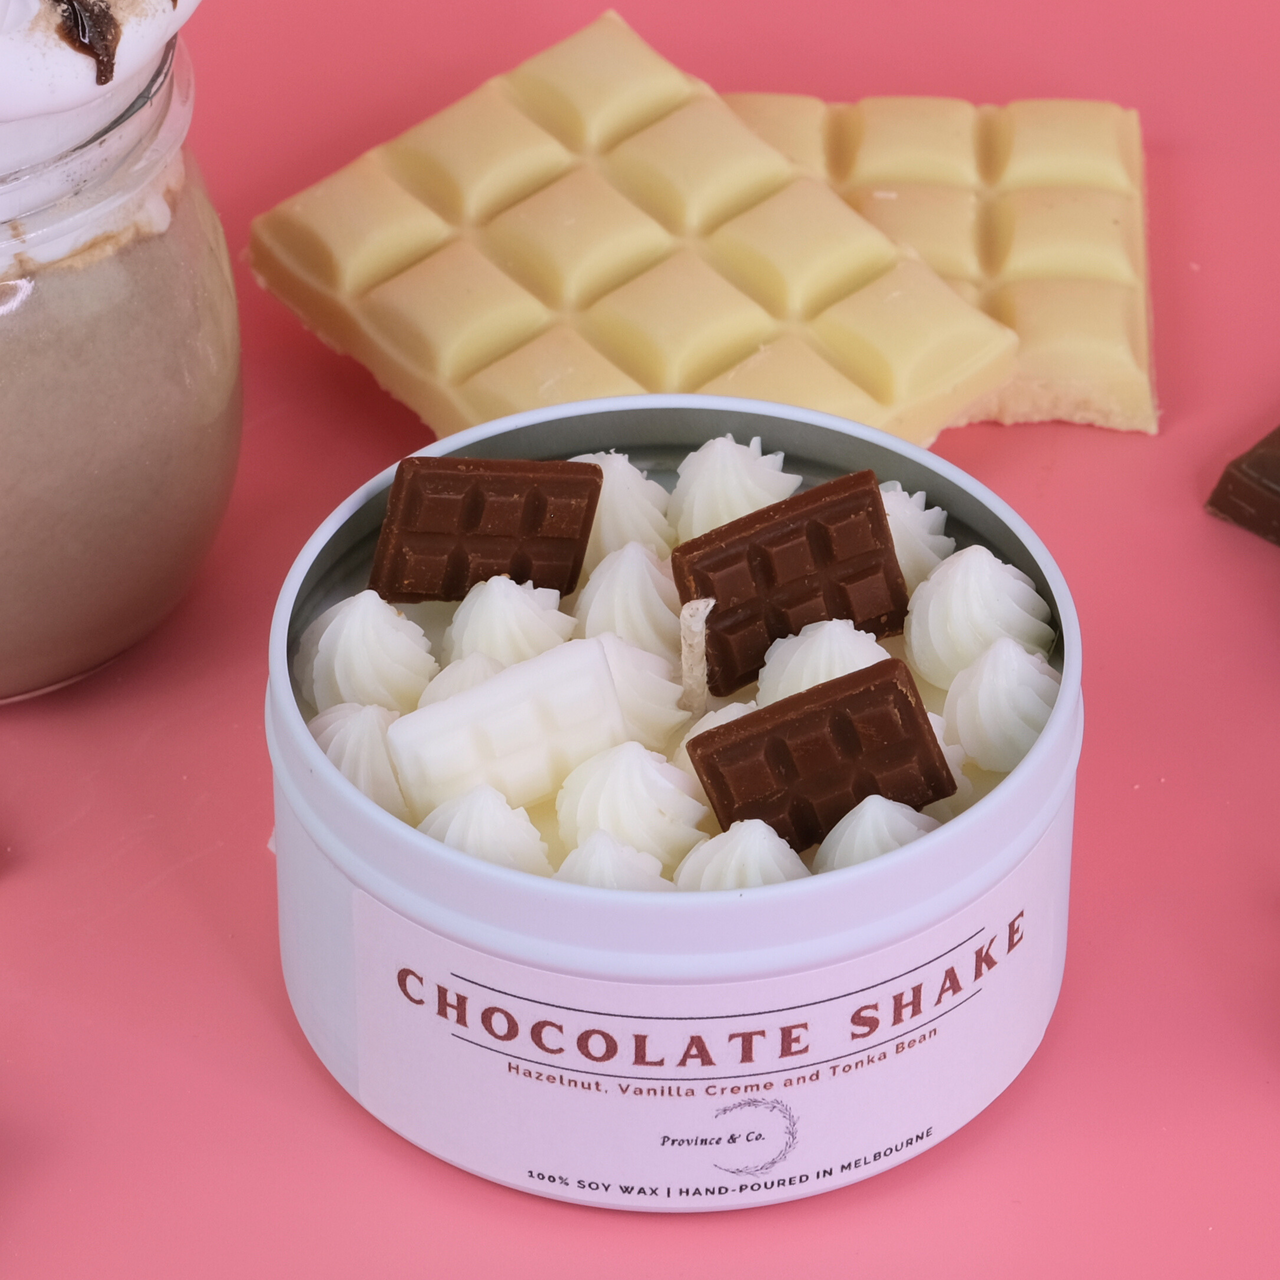 Chocolate Shake | Hazlenut + Vanilla Crème + Tonka Bean